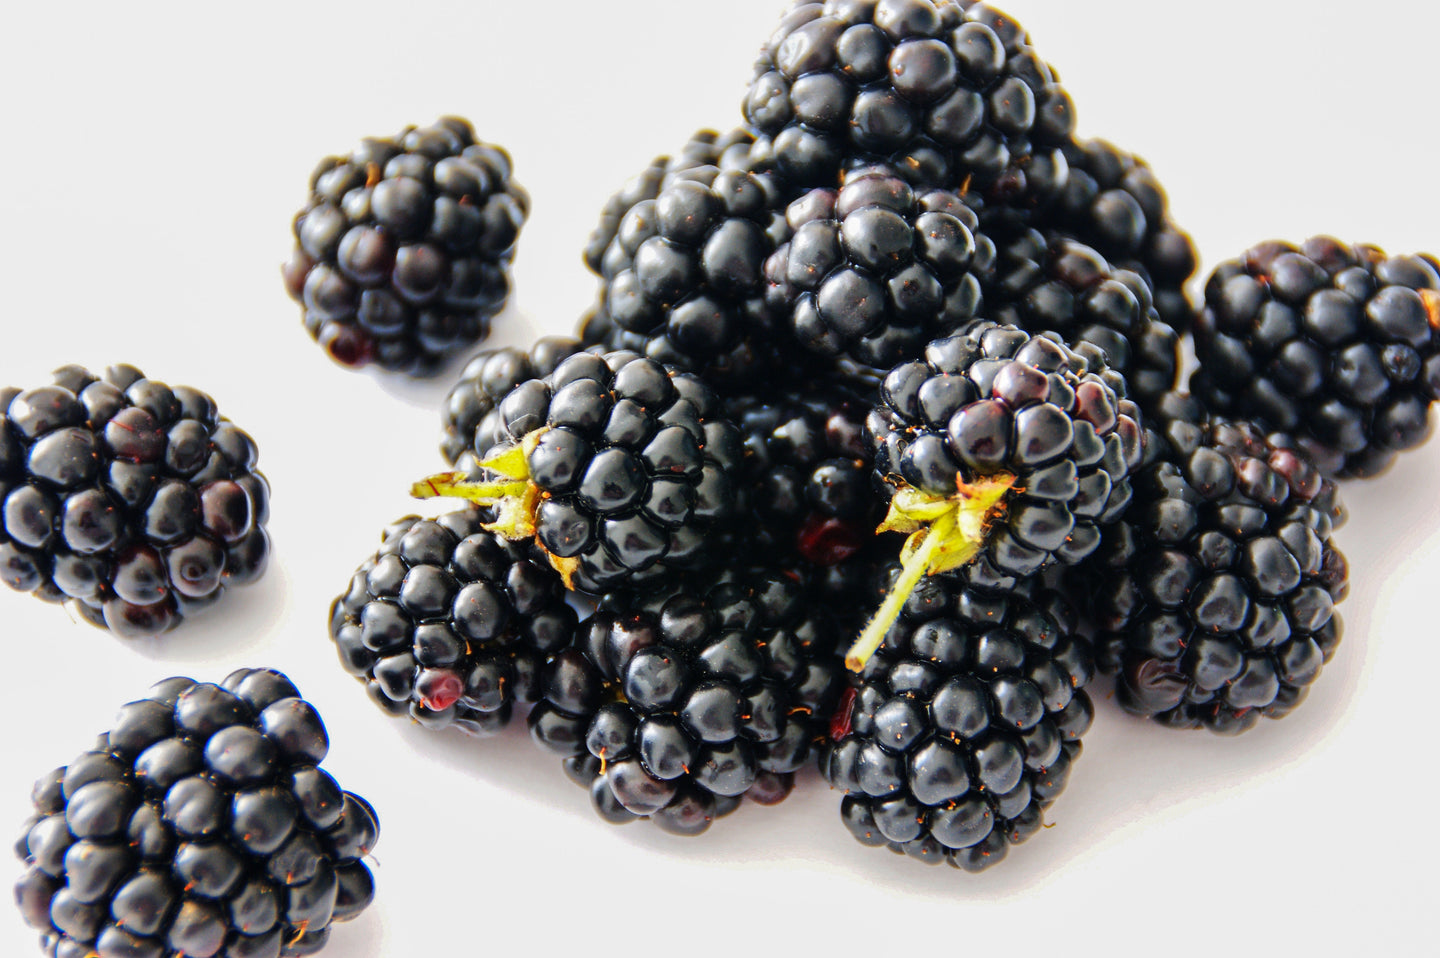 Case of Blackberries